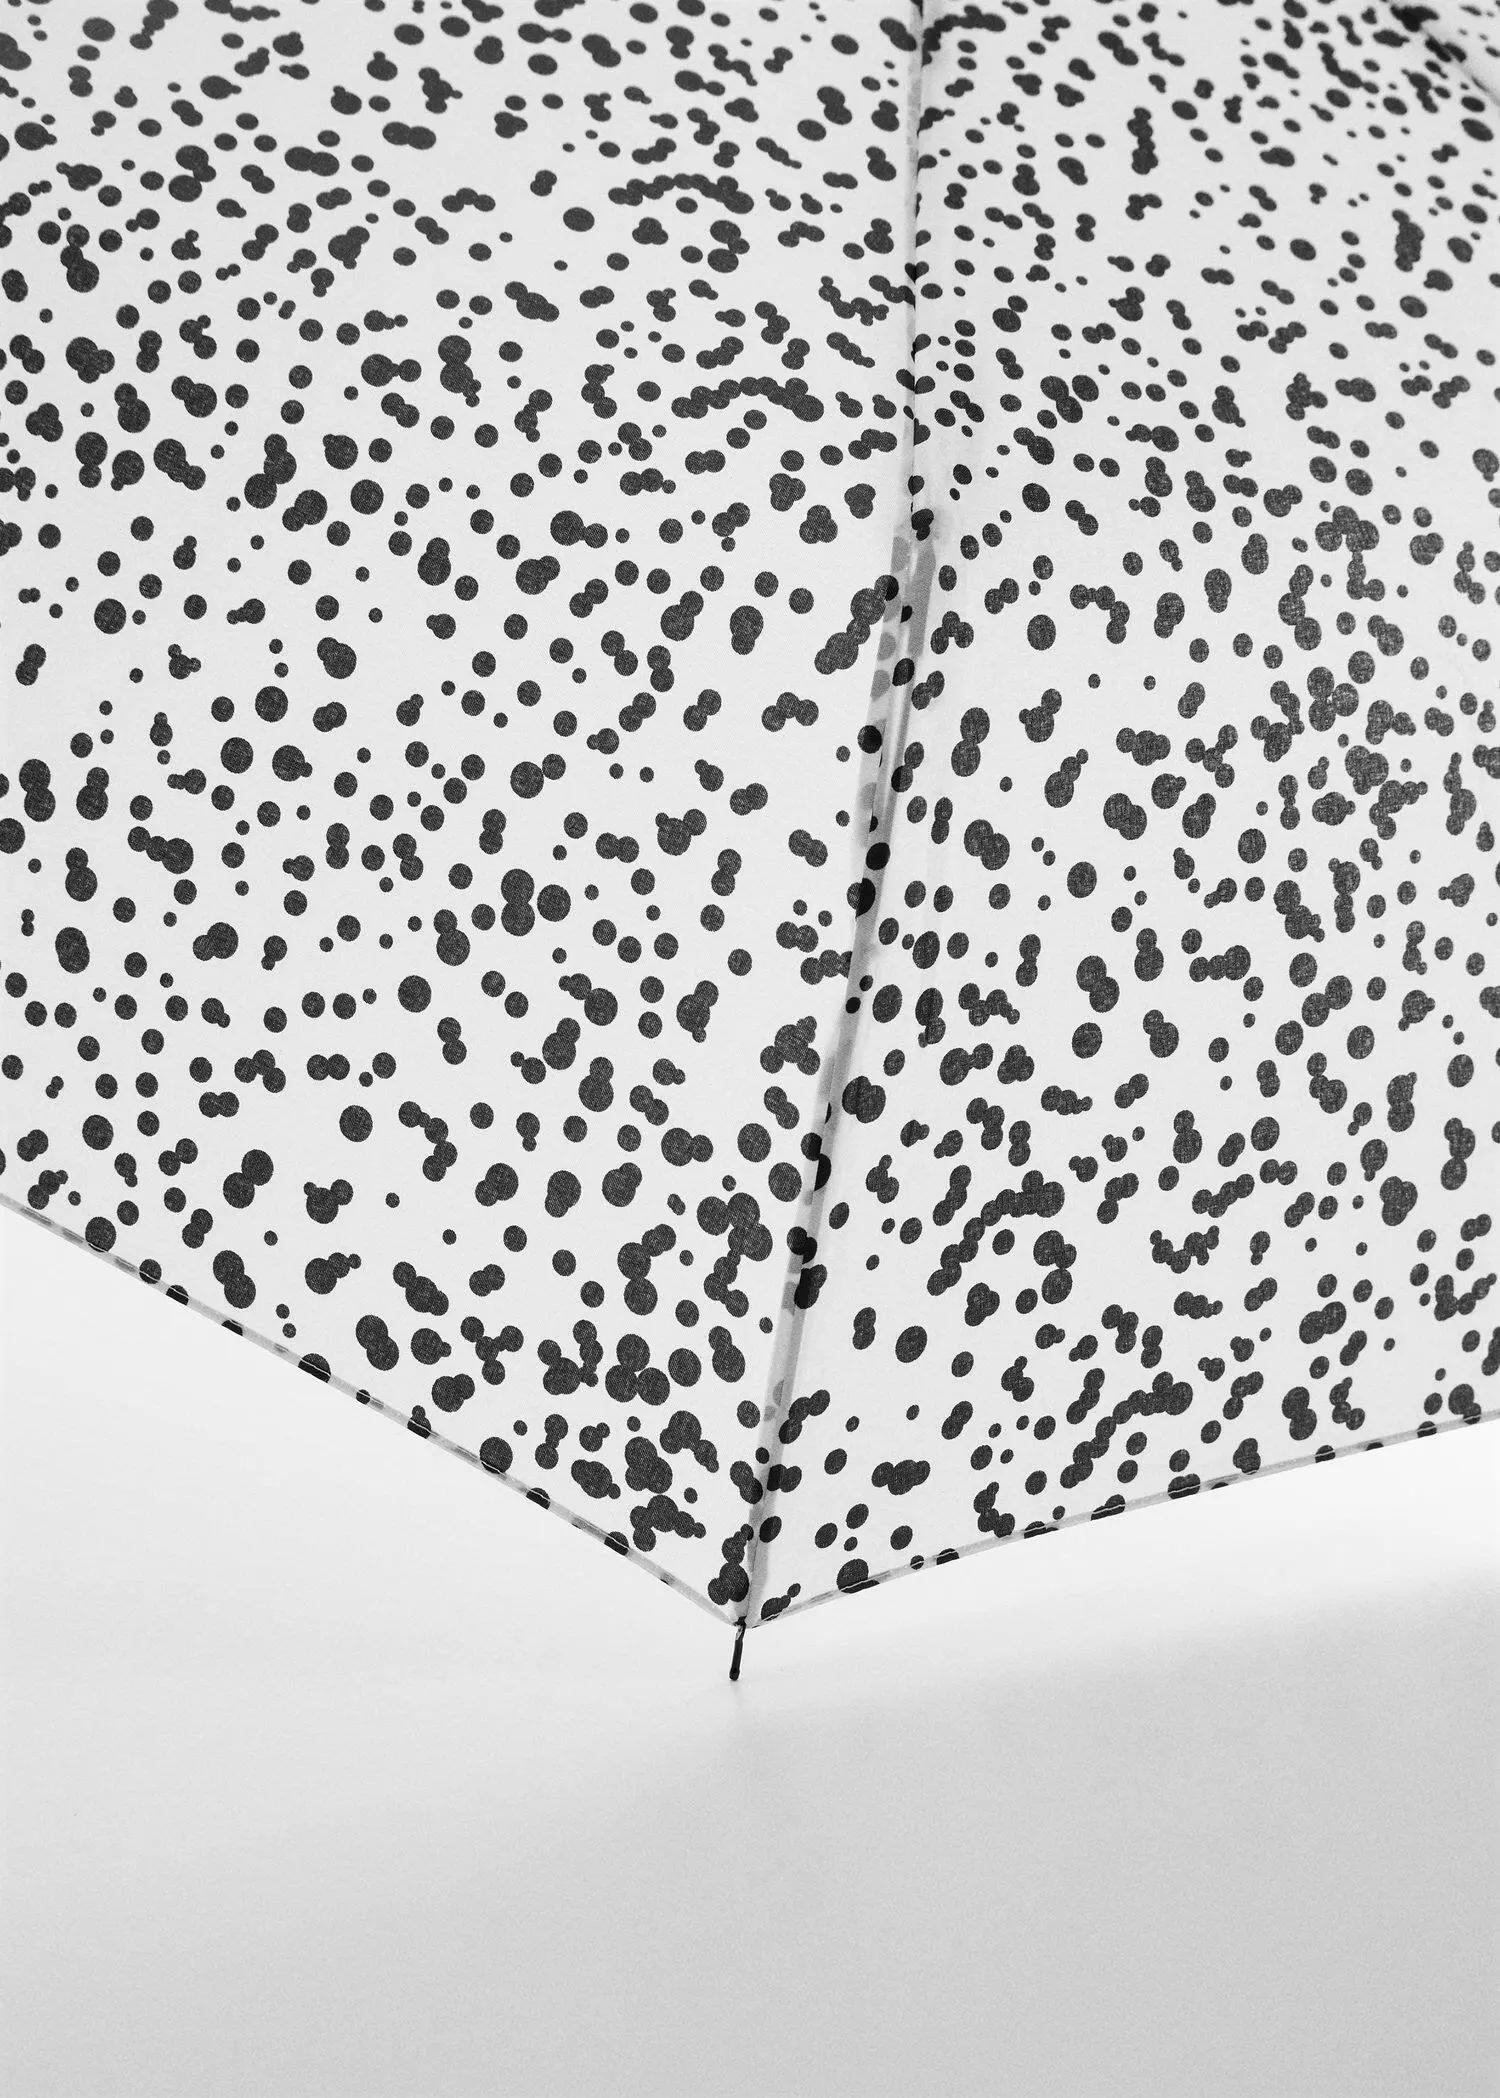 Mango Print folding umbrella. a close up of a black and white umbrella. 